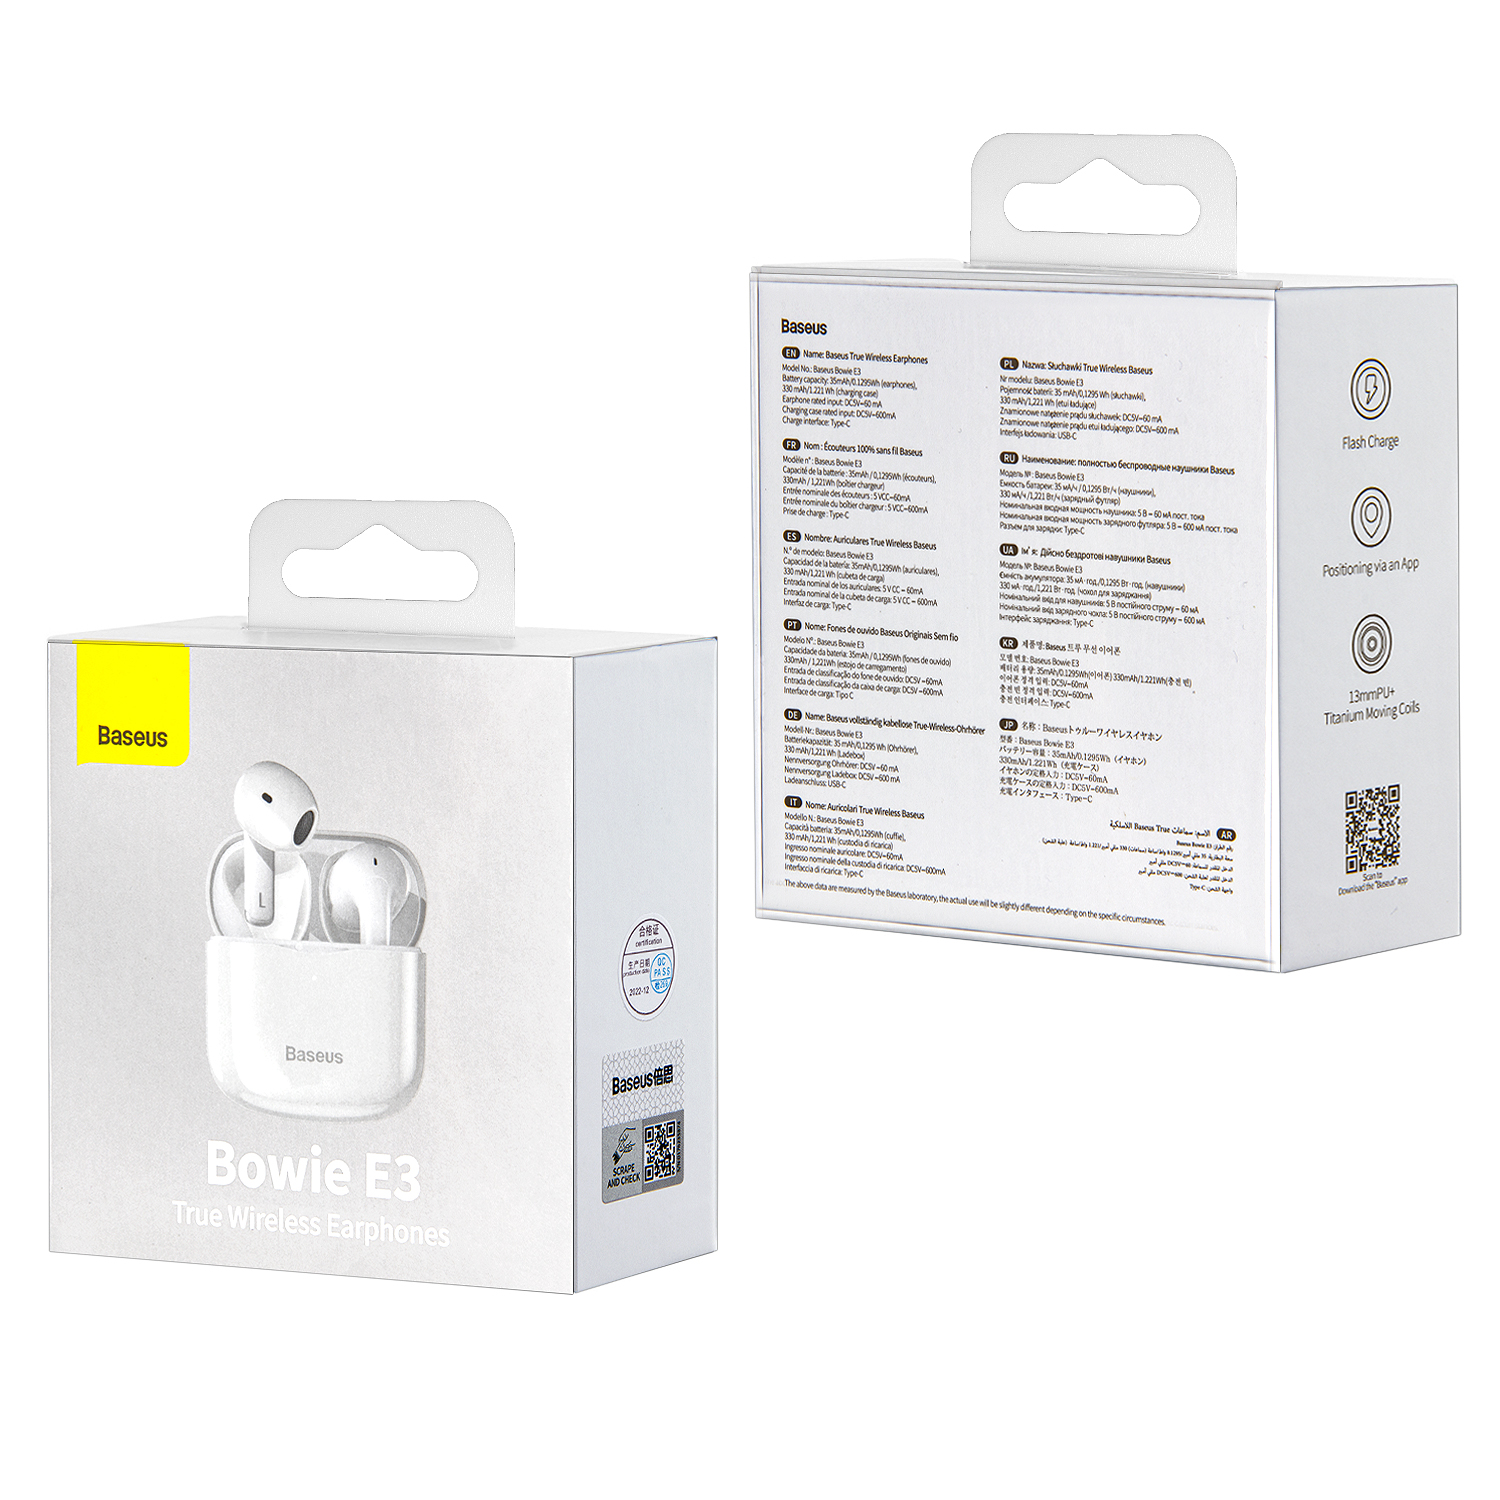 Наушники Bluetooth E3 Bowie Wireless Baseus белый NGTW080002